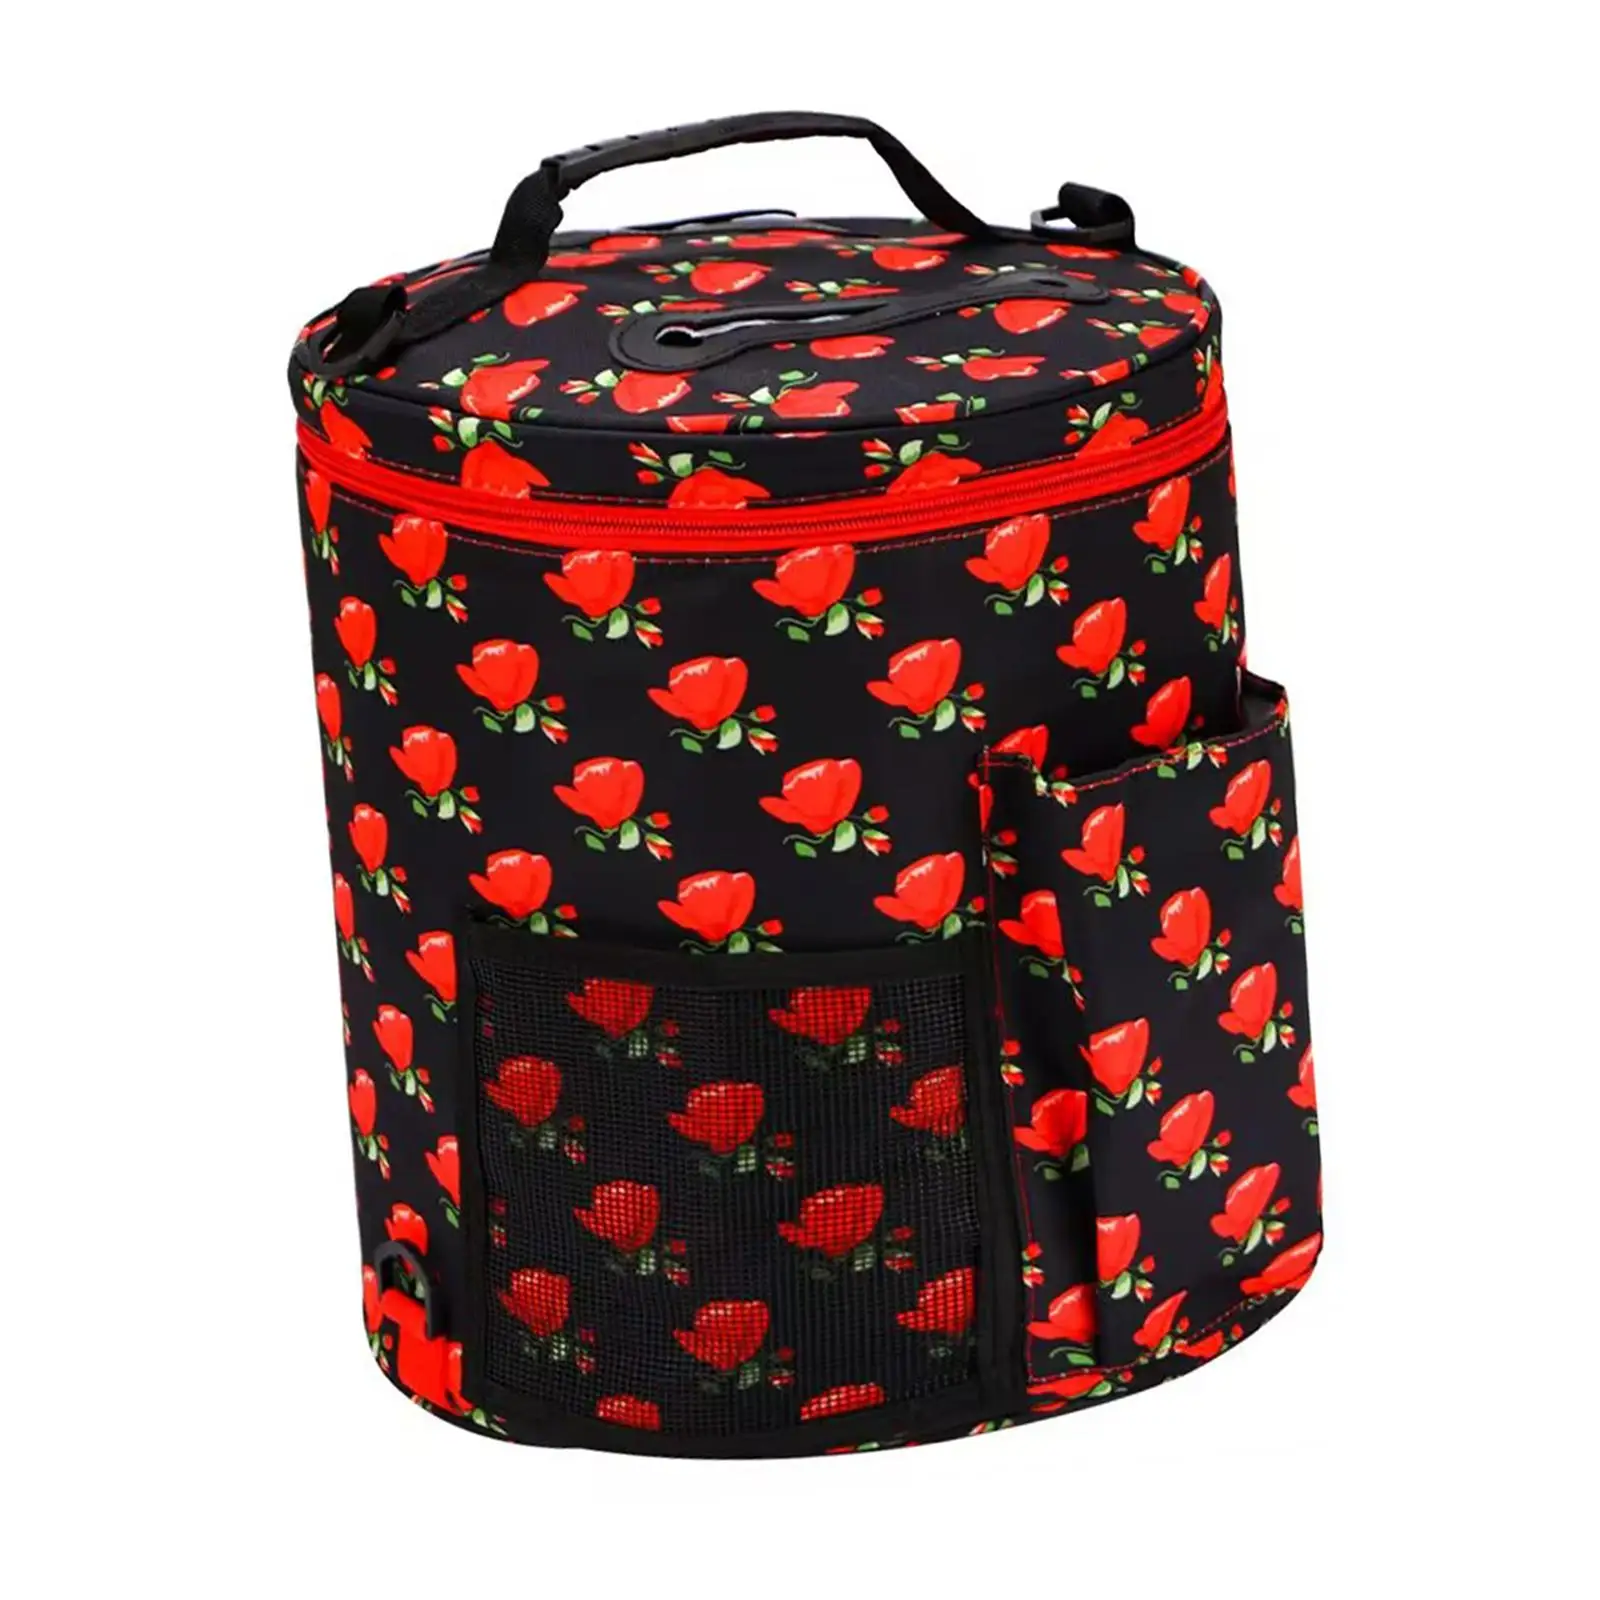 Yarn Case with Shoulder Strap Oxford Cloth Travel Portable Small Yarn Holder